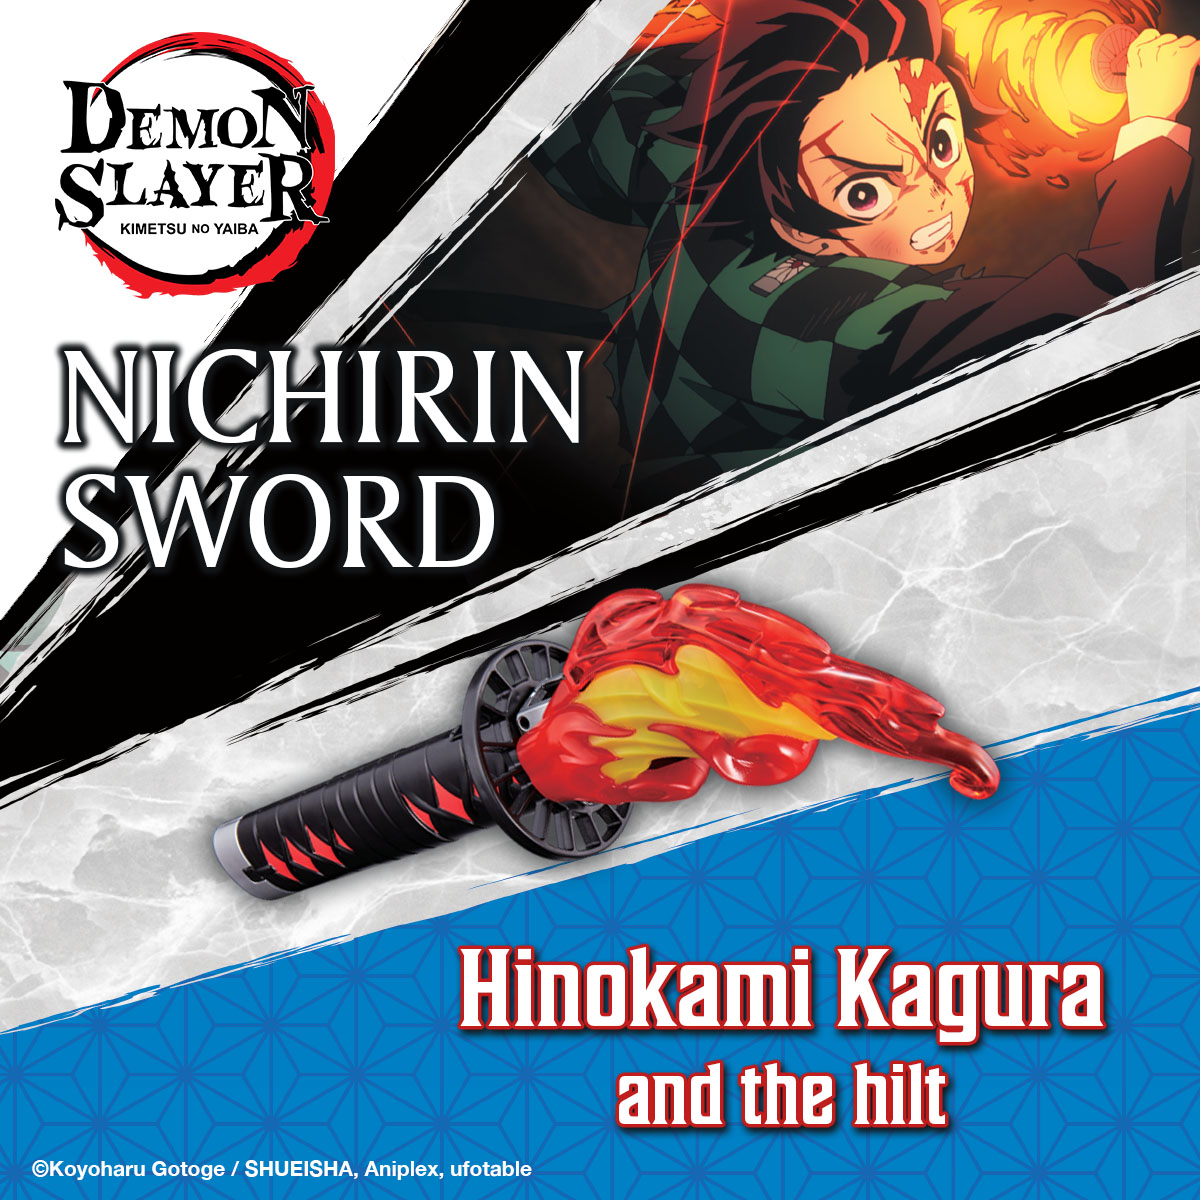 Demon Slayer DX Nichirin Sword  [Mar 2021 Delivery]